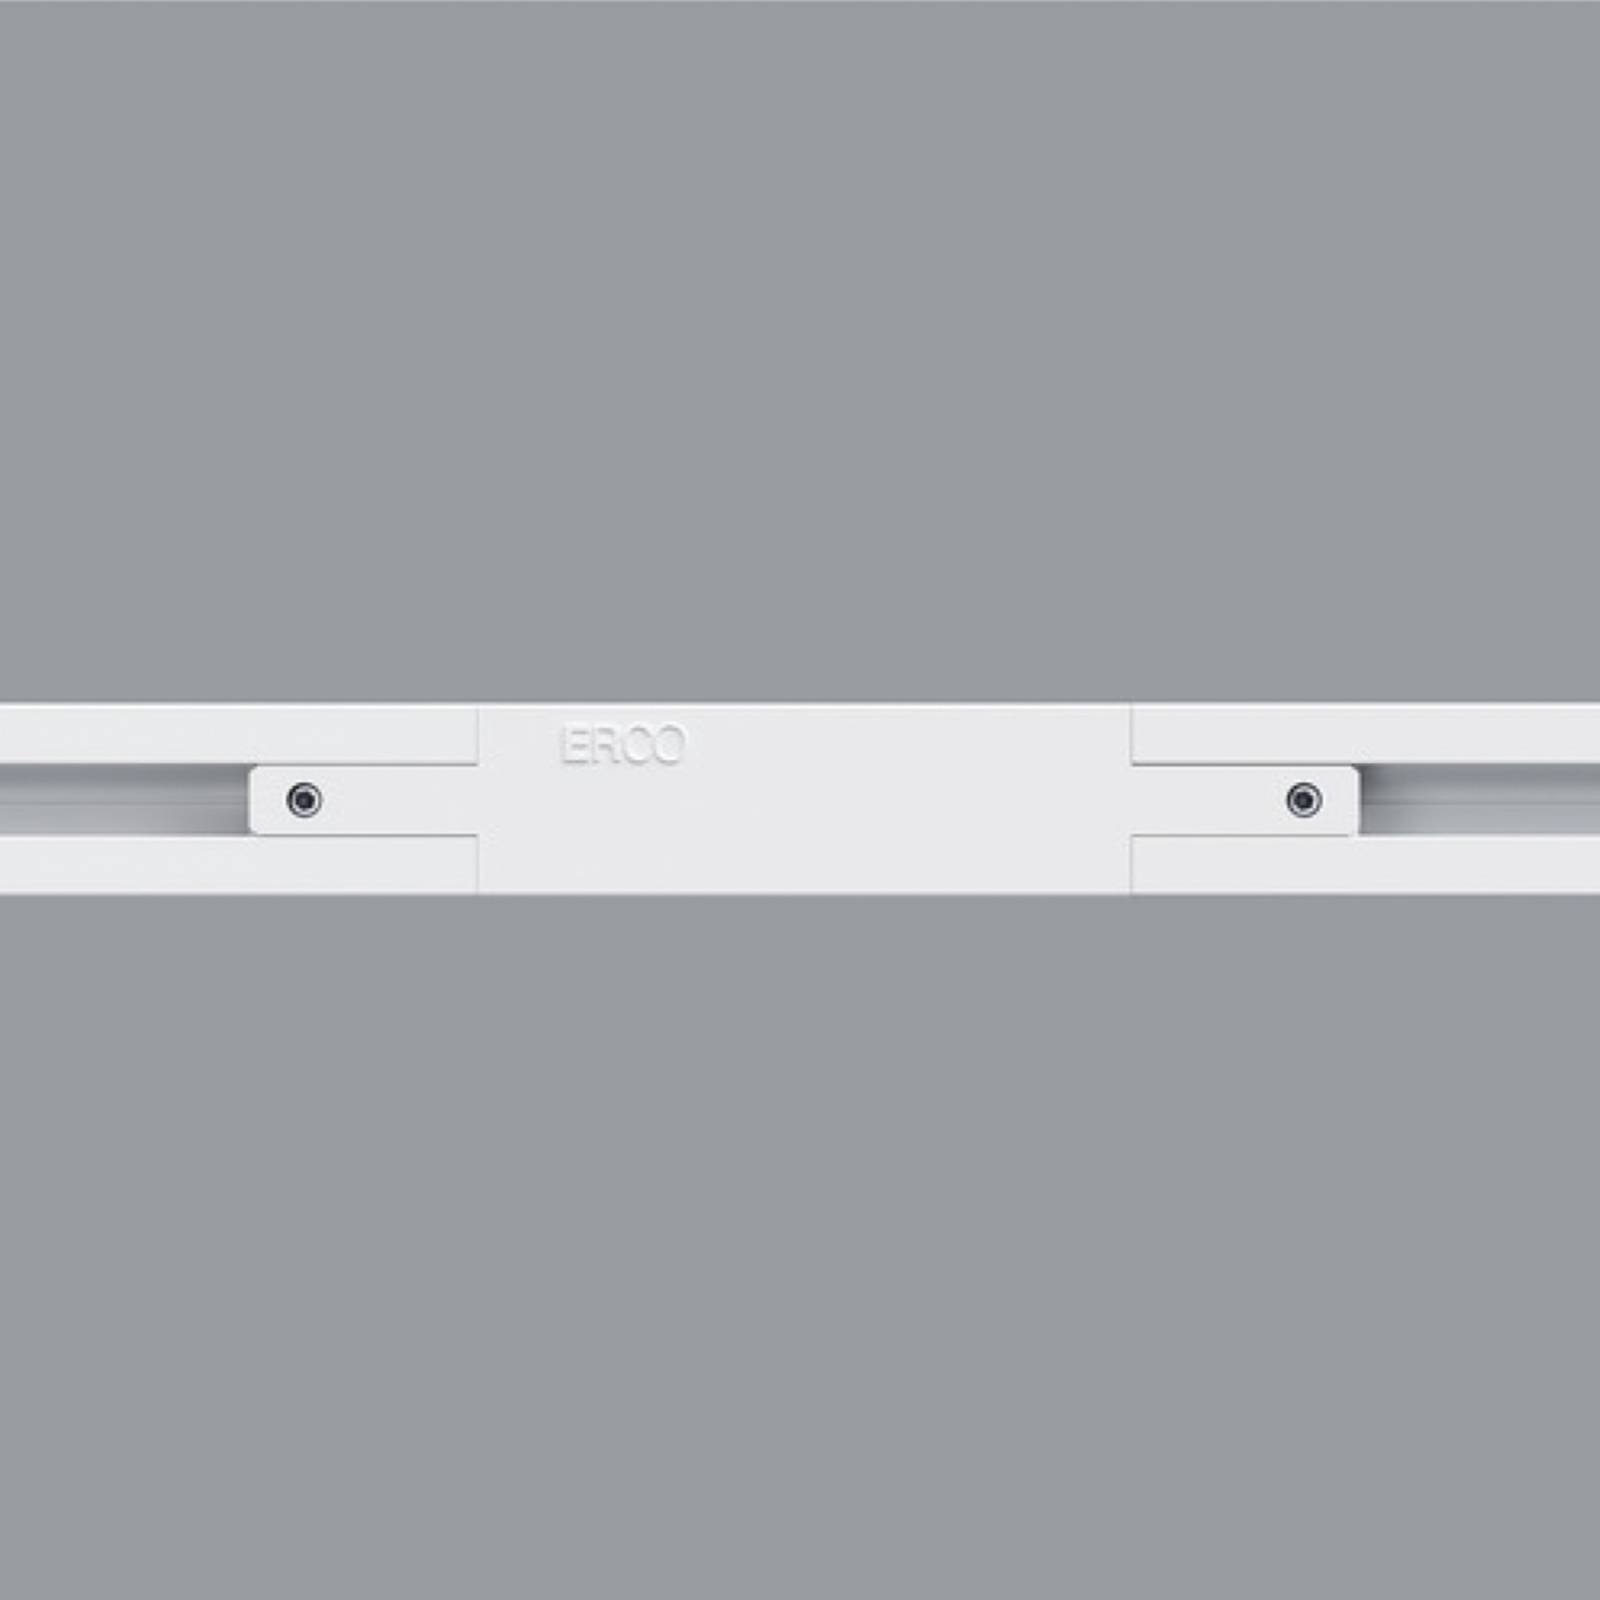 E-shop ERCO menič polarity pre Minirail koľajnice, biela